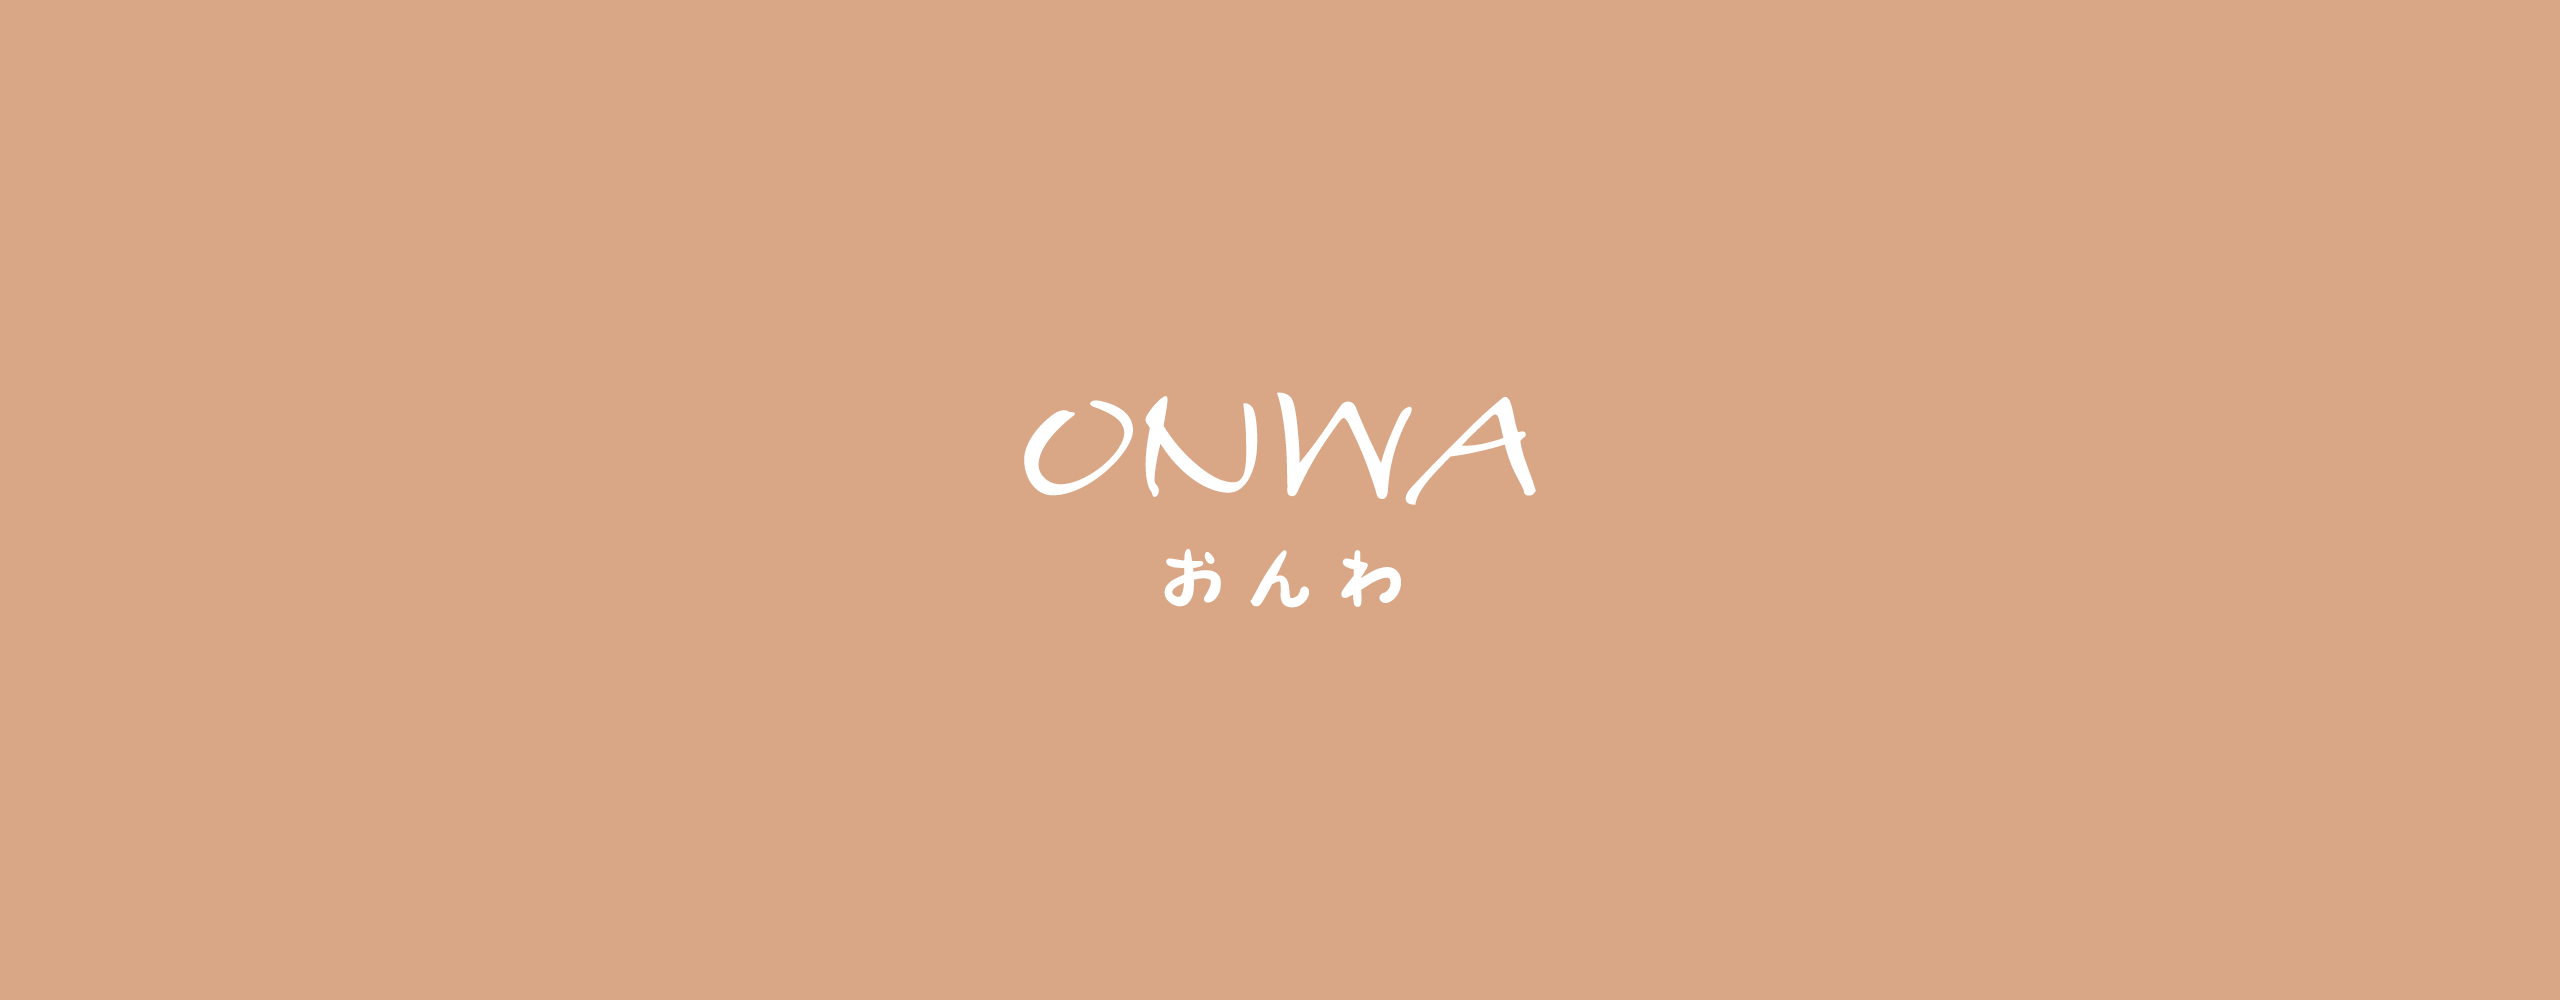 ONWA